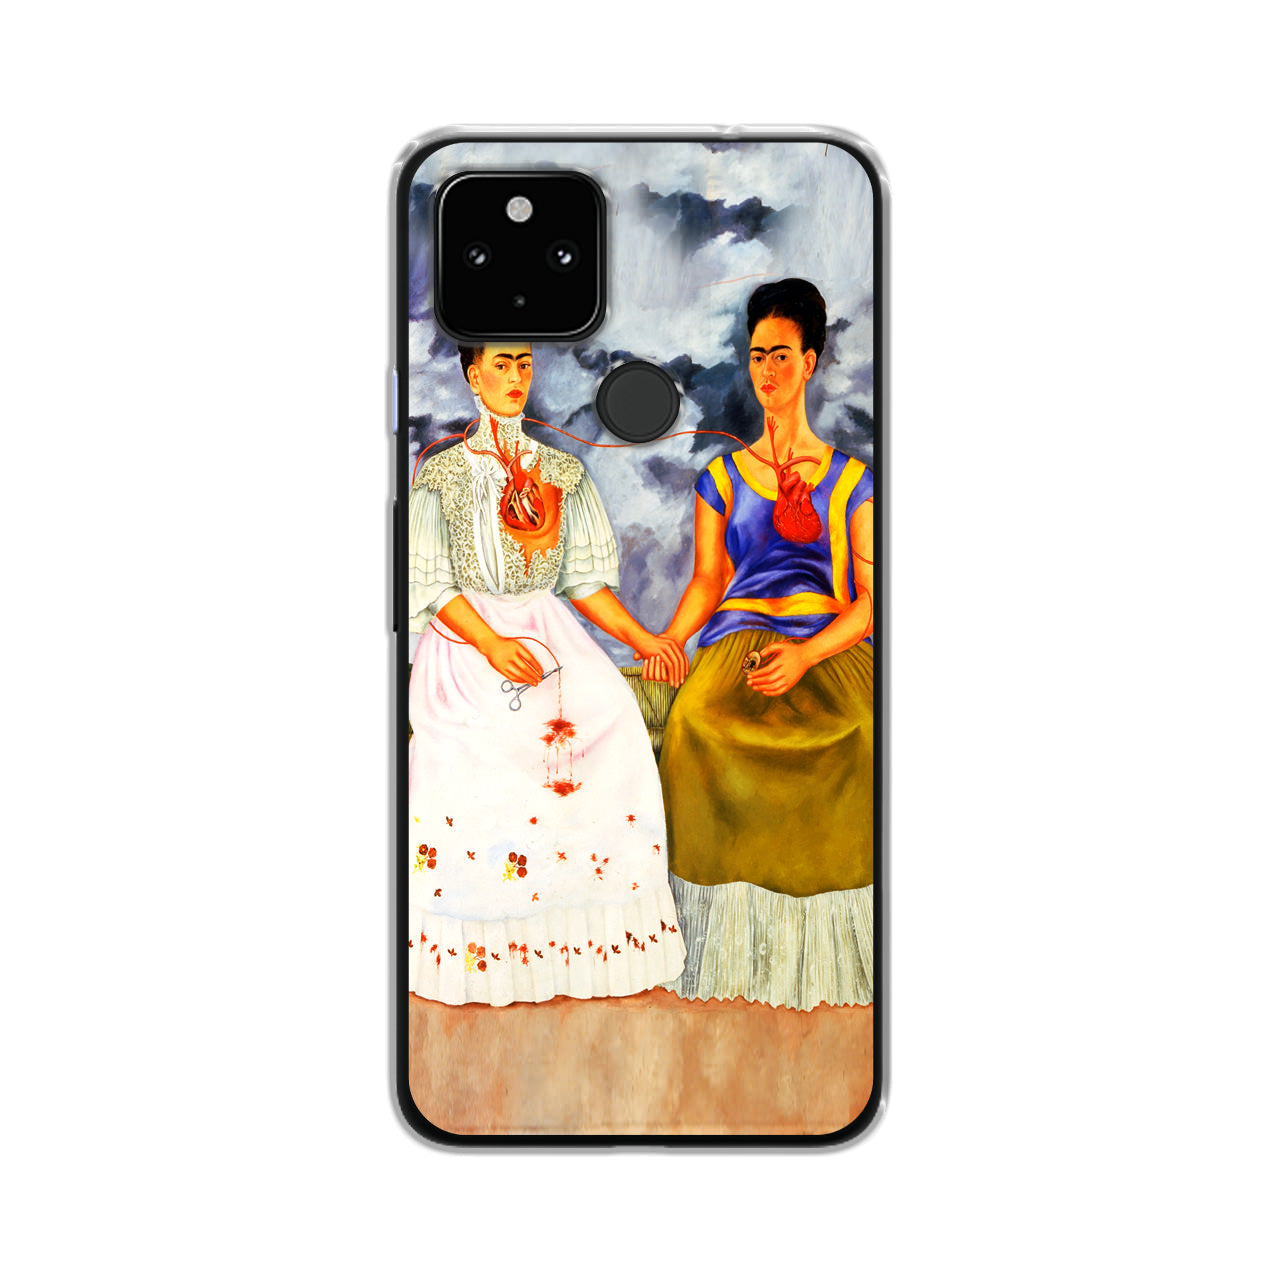 Frida Kahlo The Two Fridas Google Pixel 5 Case